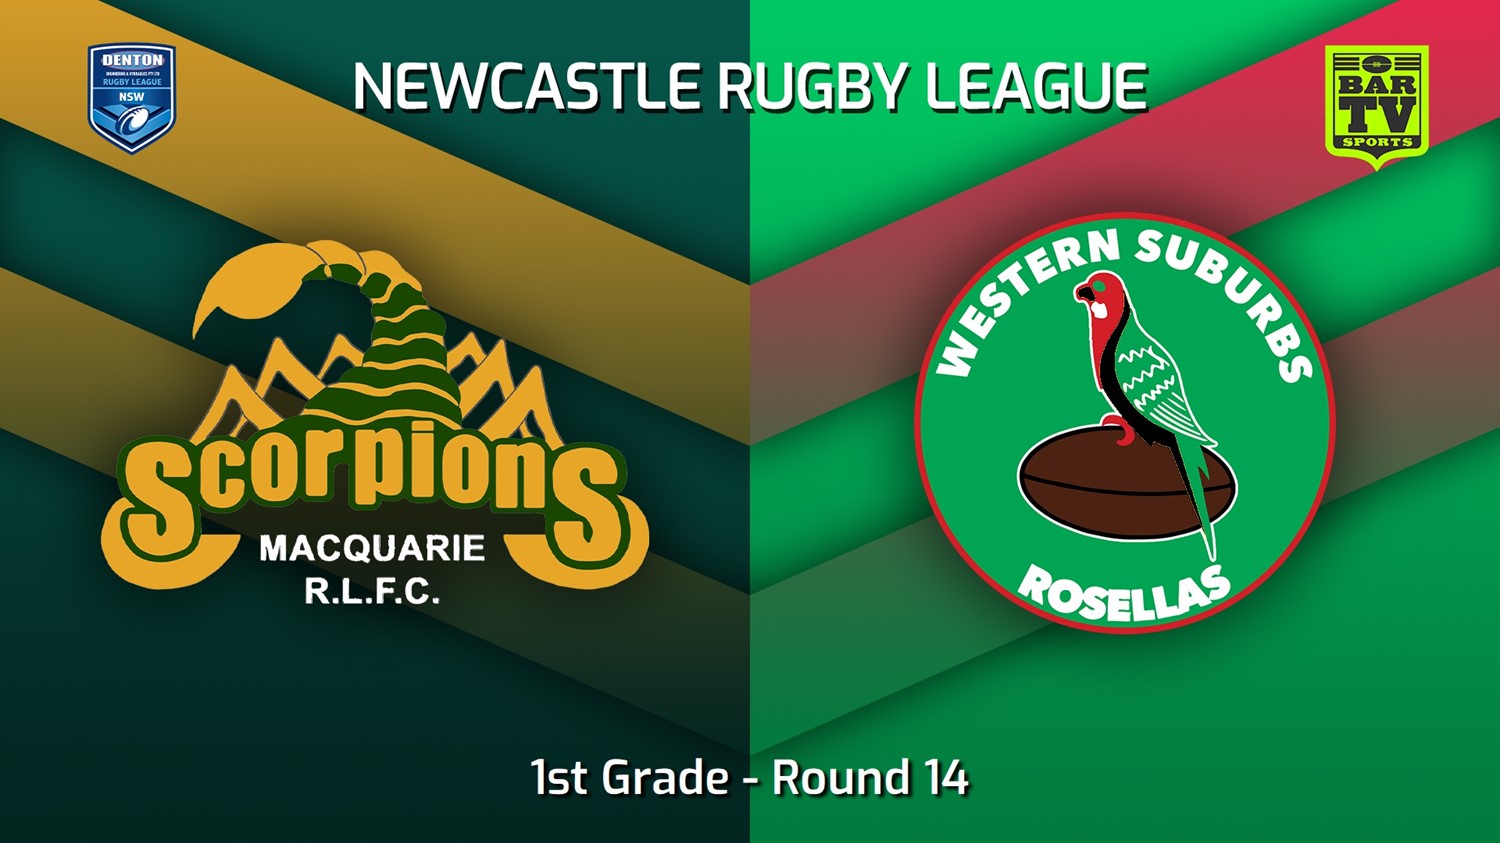 230701-Newcastle RL Round 14 - 1st Grade - Macquarie Scorpions v Western Suburbs Rosellas Minigame Slate Image